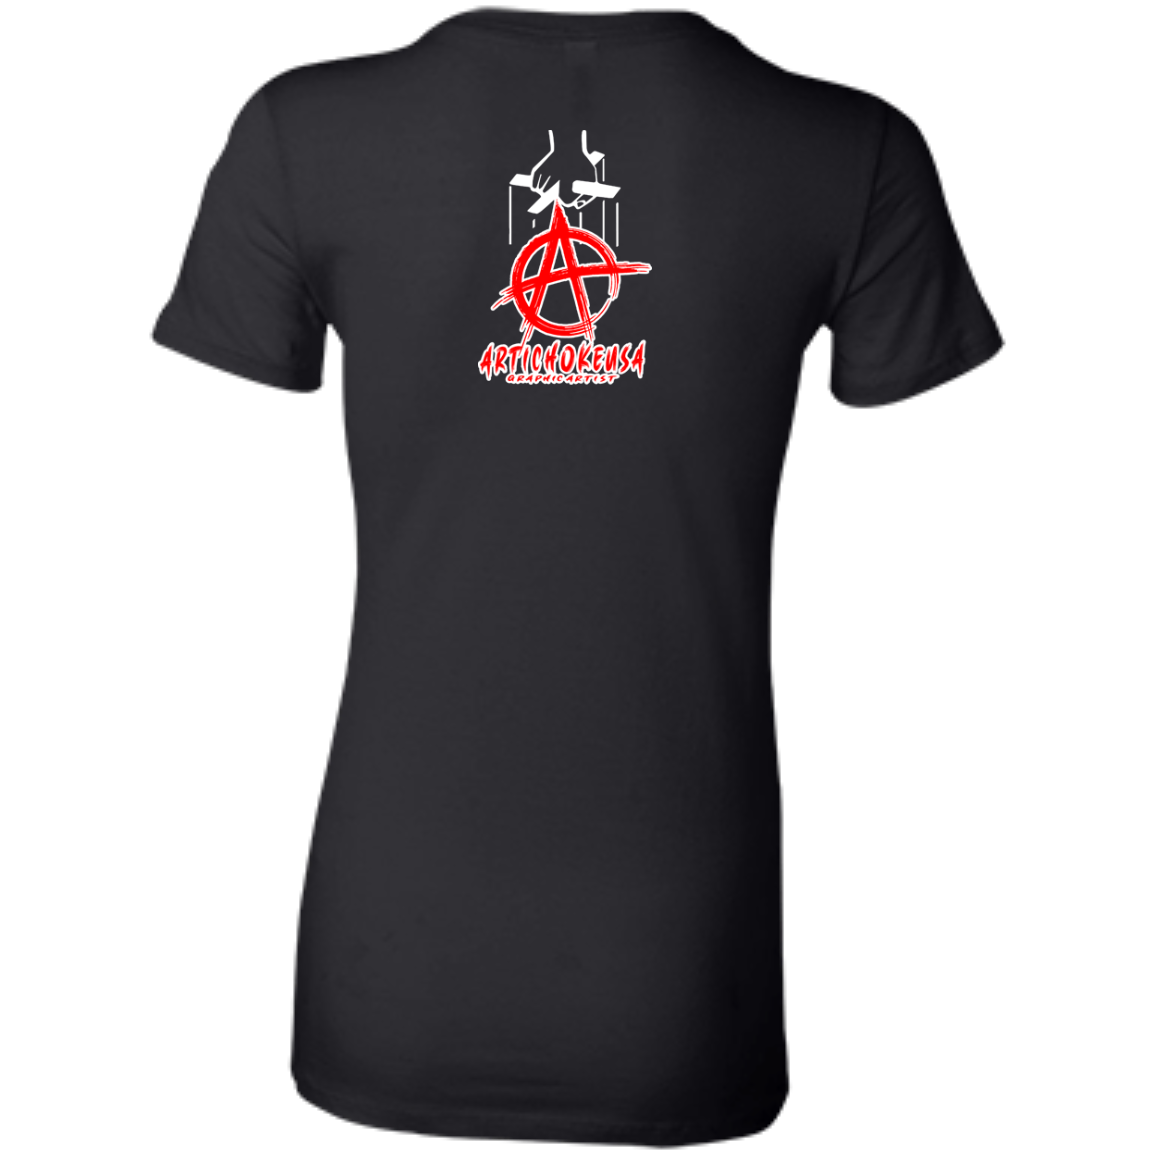 ArtichokeUSA Custom Design. Godfather Simms. NY Giants Superbowl XXI Champions. Fan Art. Ladies' Favorite T-Shirt